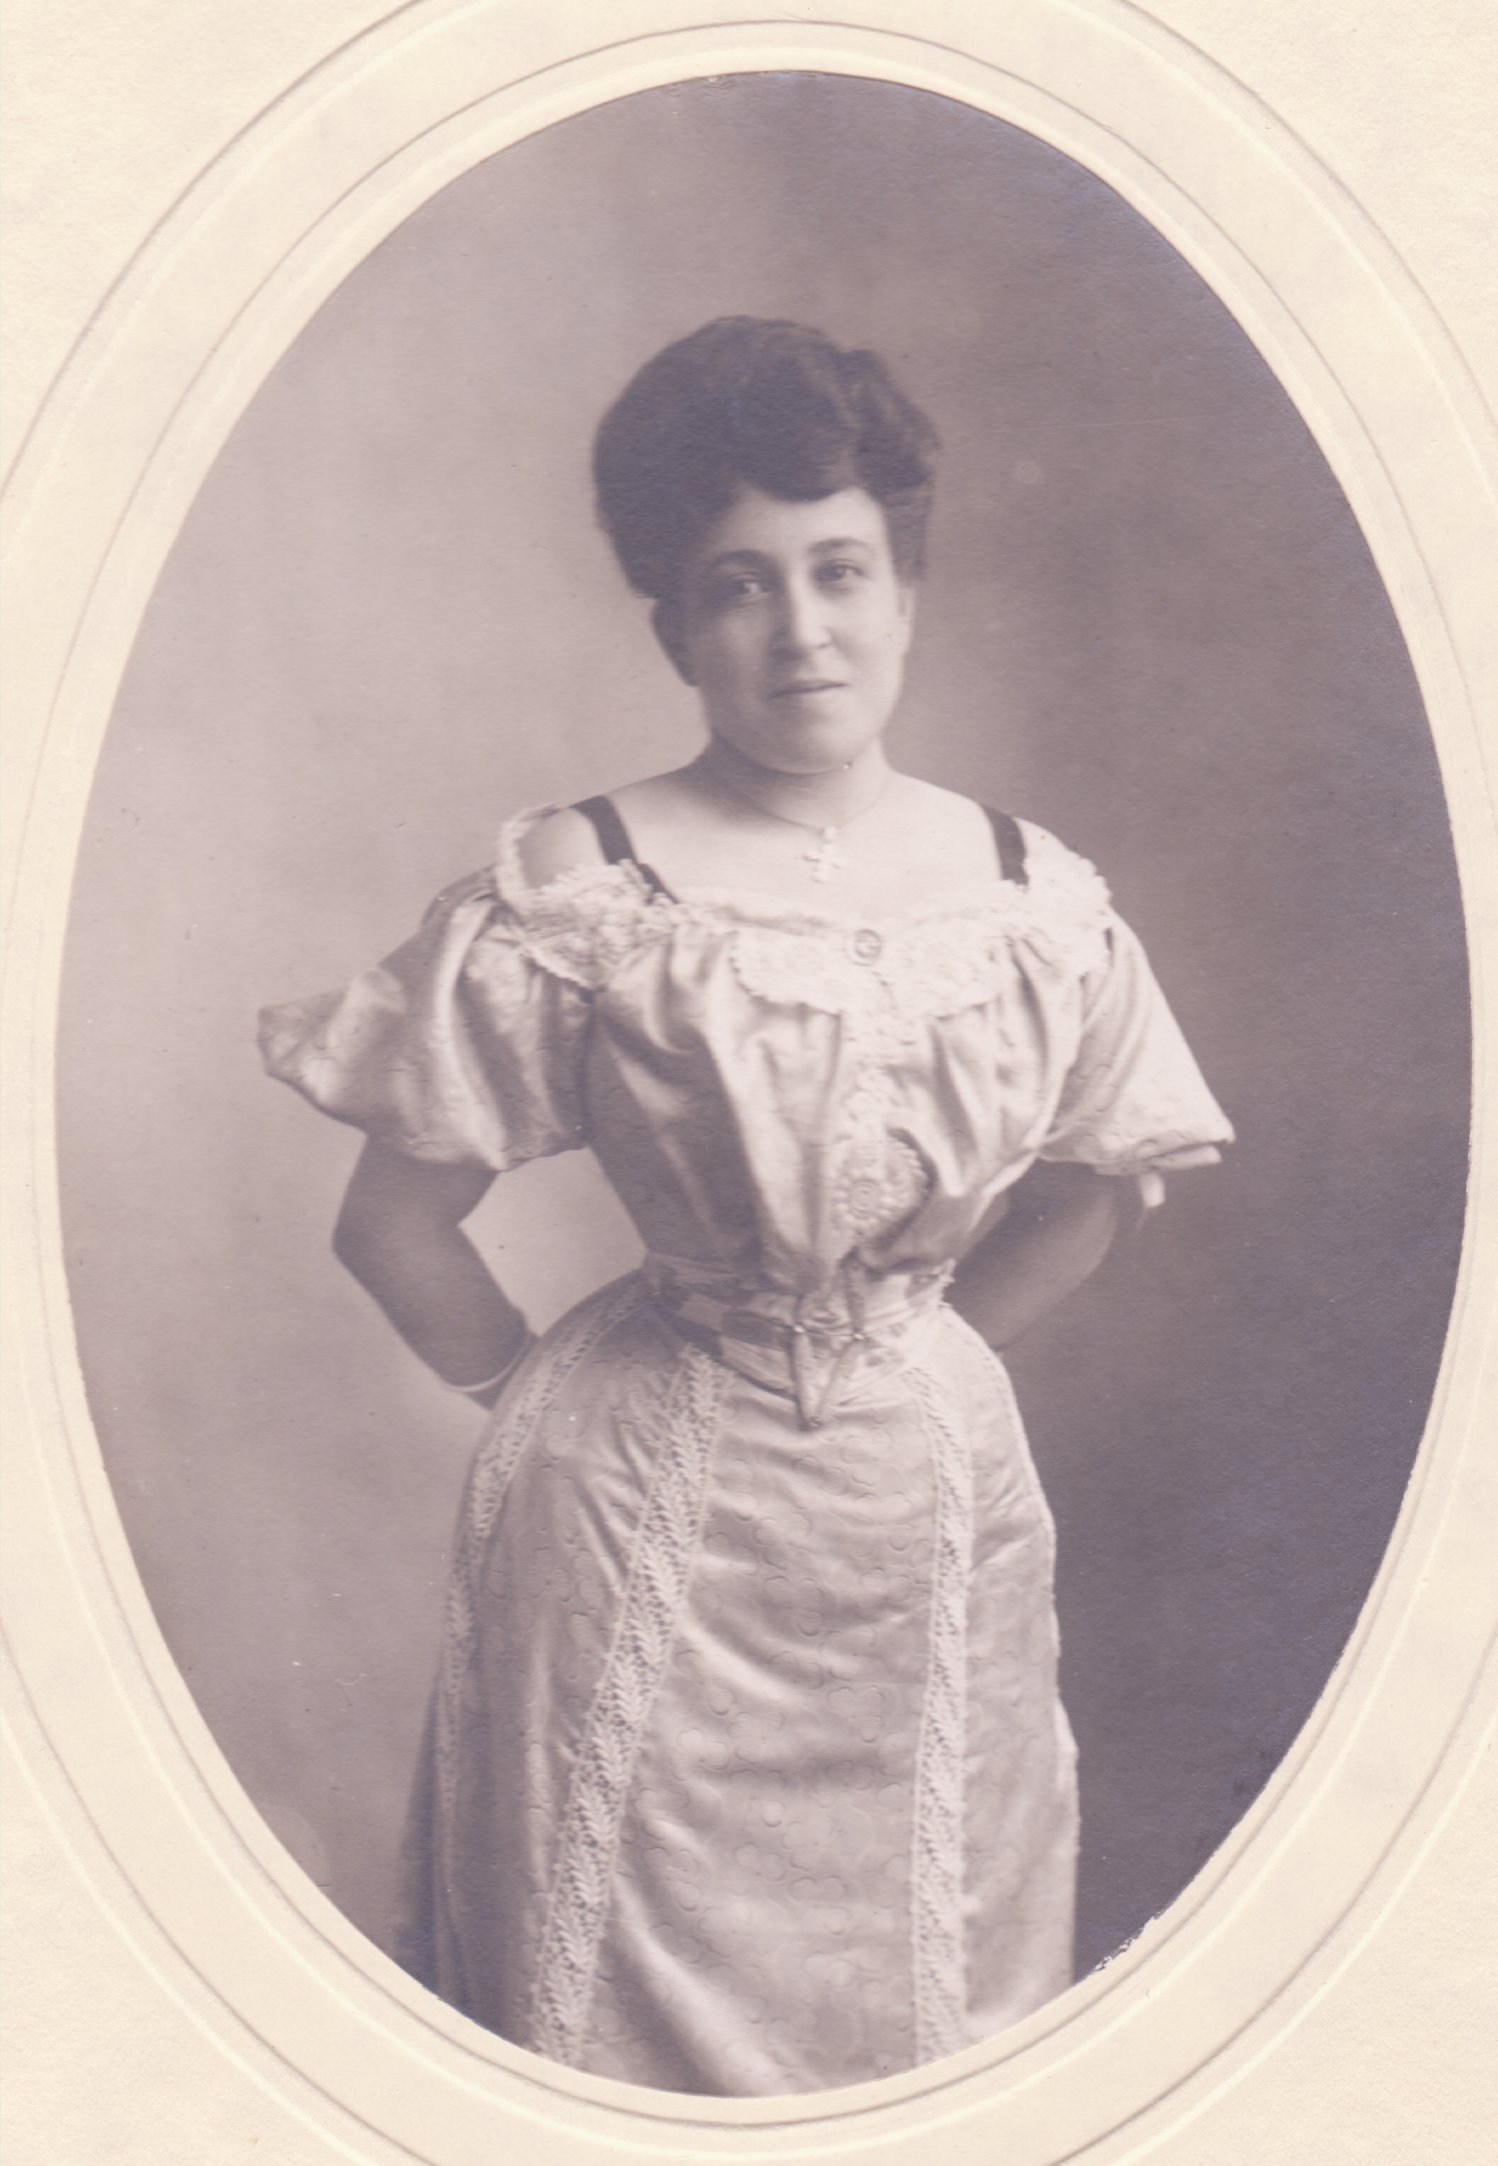 Concepción “Concha” (Luján) Newman (1884-1953), daughter of José Mauro Luján